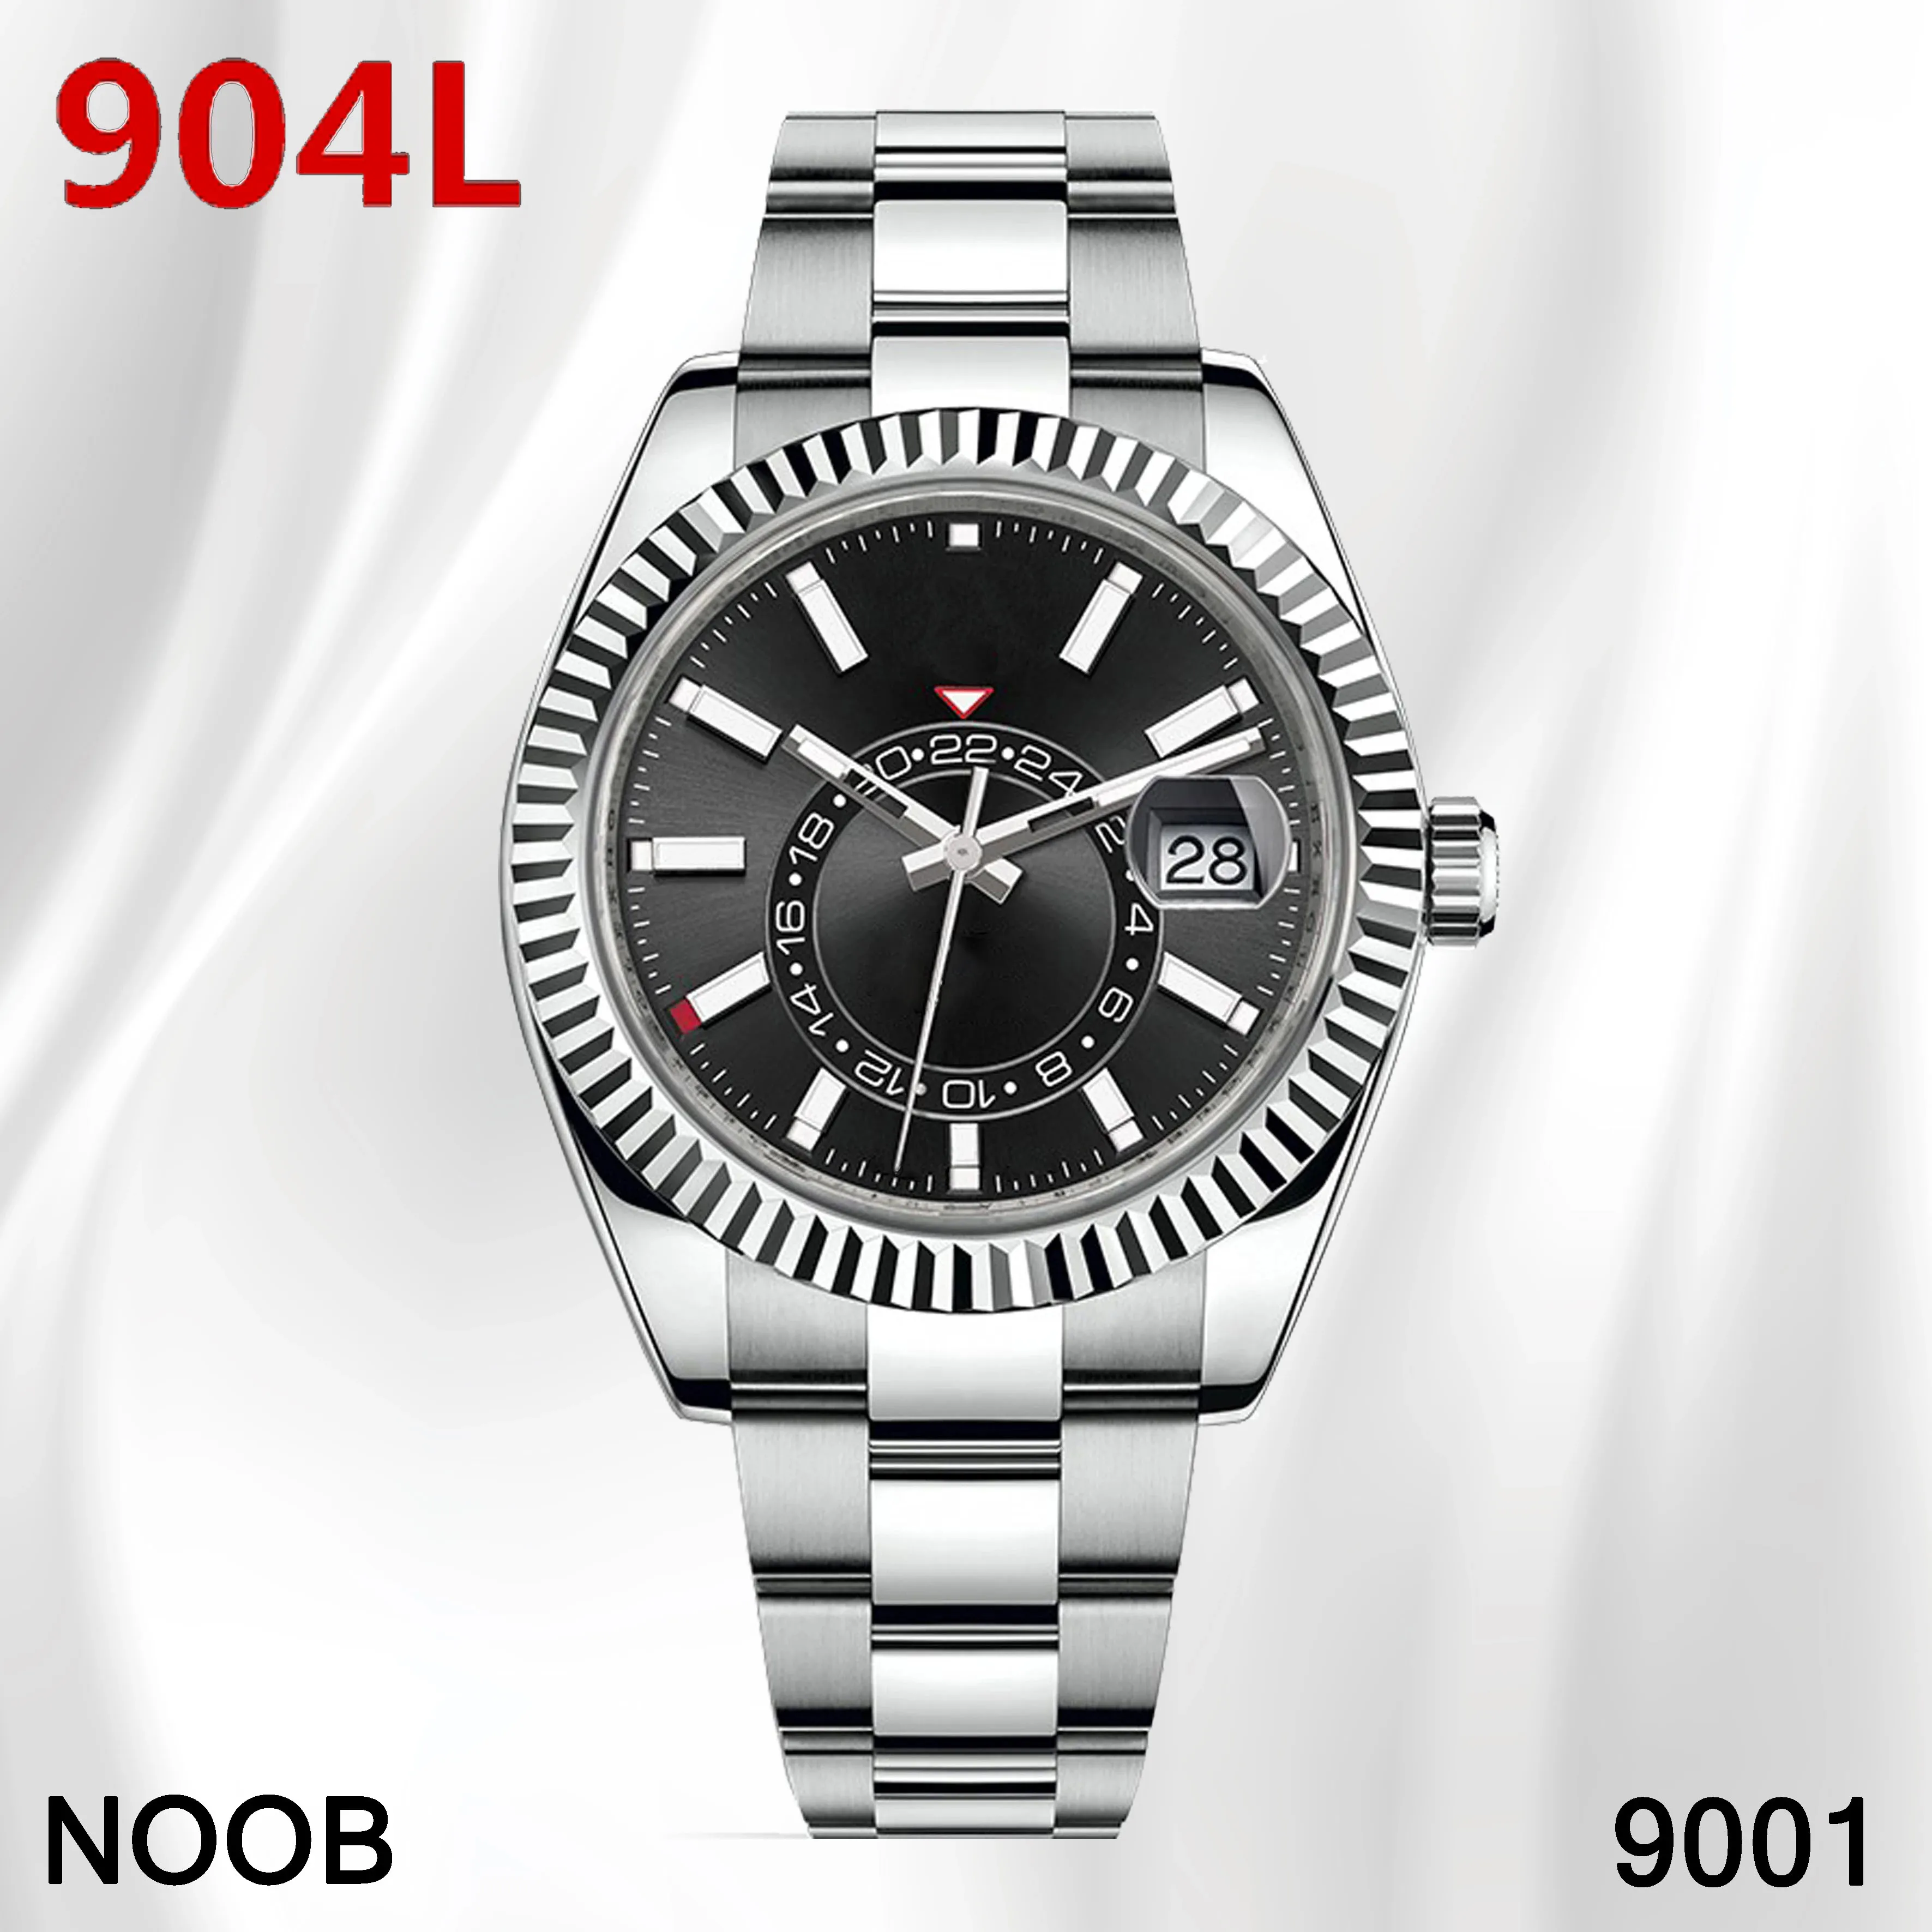 Top Quality 904L Stainless Steel Sapphire Crystal Sapphire Crystal Automaitc Movement Waterproof ETA2813 Man Wristwatches